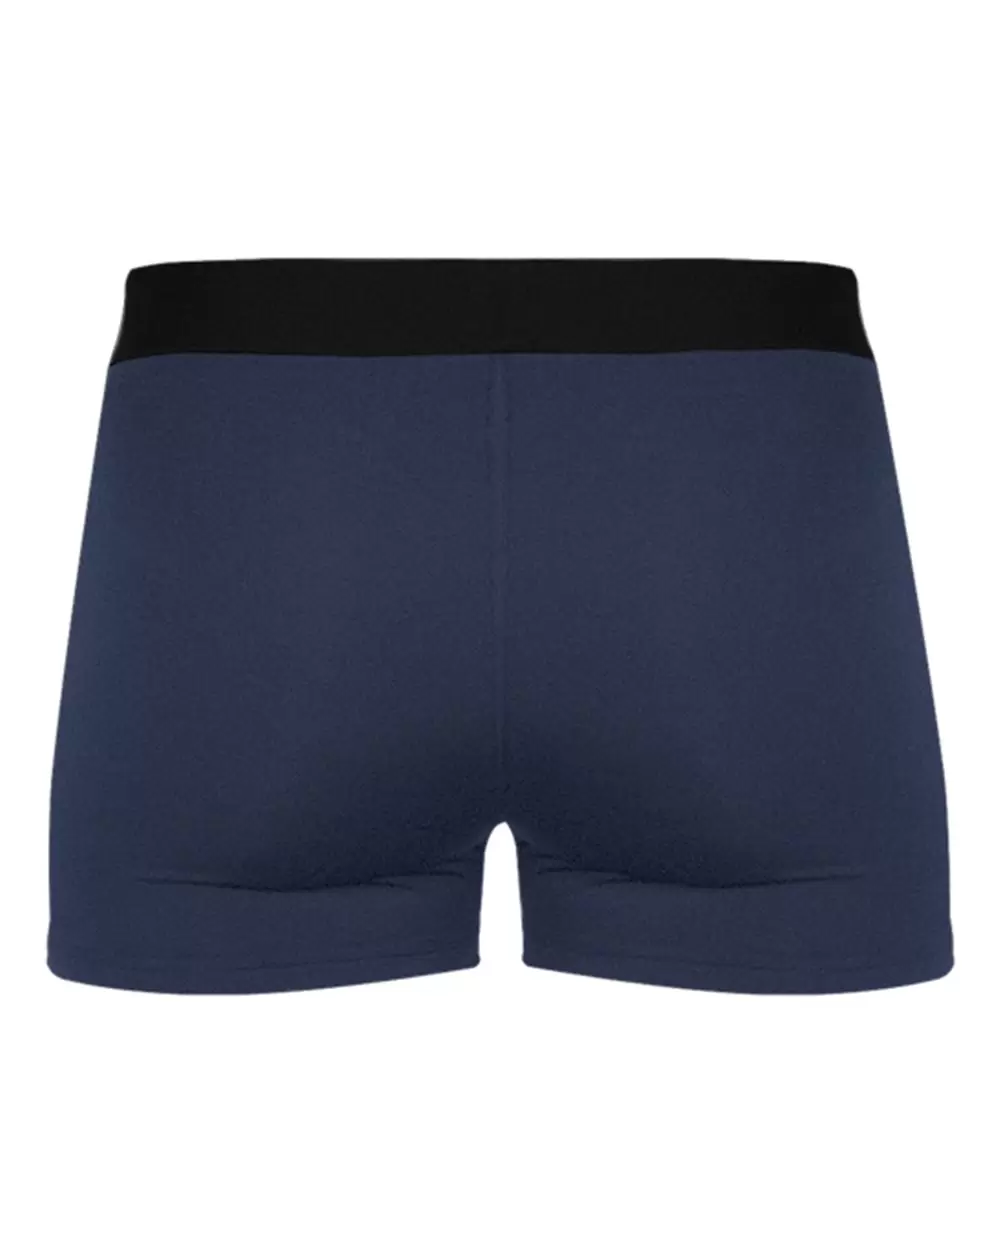 Badger Sportswear 2629 Girls Pro-Compression Shorts